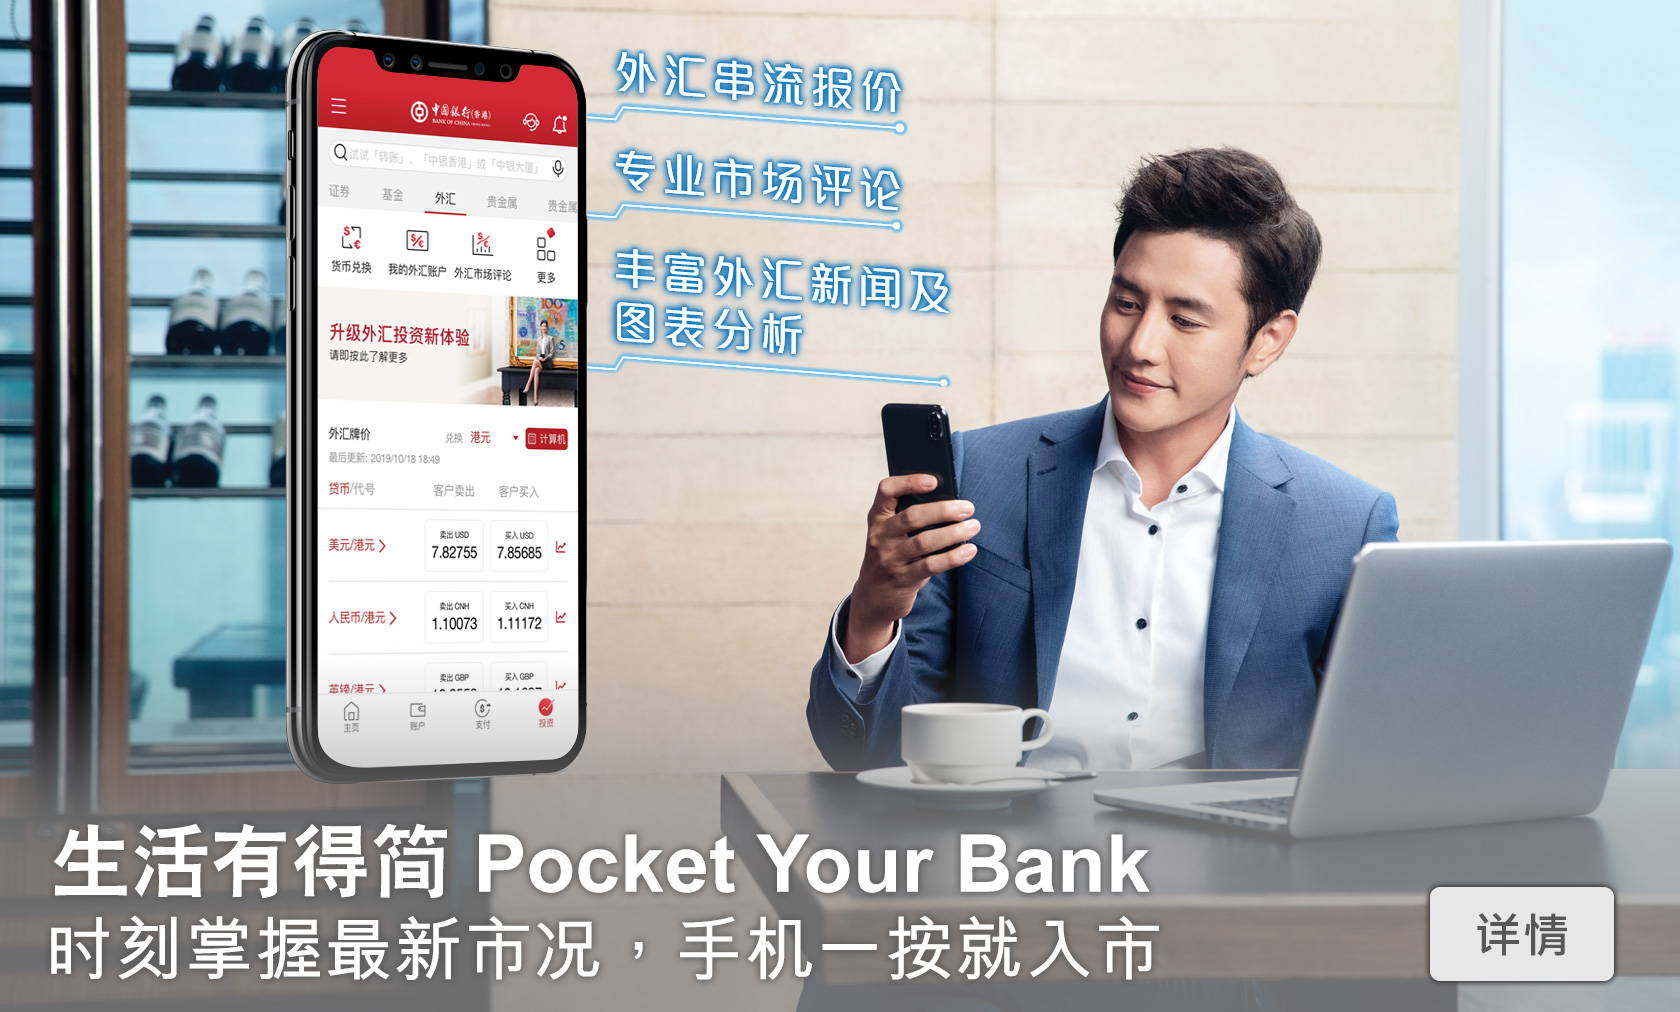 生活有得简 Pocket Your Bank
        时刻掌握最新市况，手机一按就入市